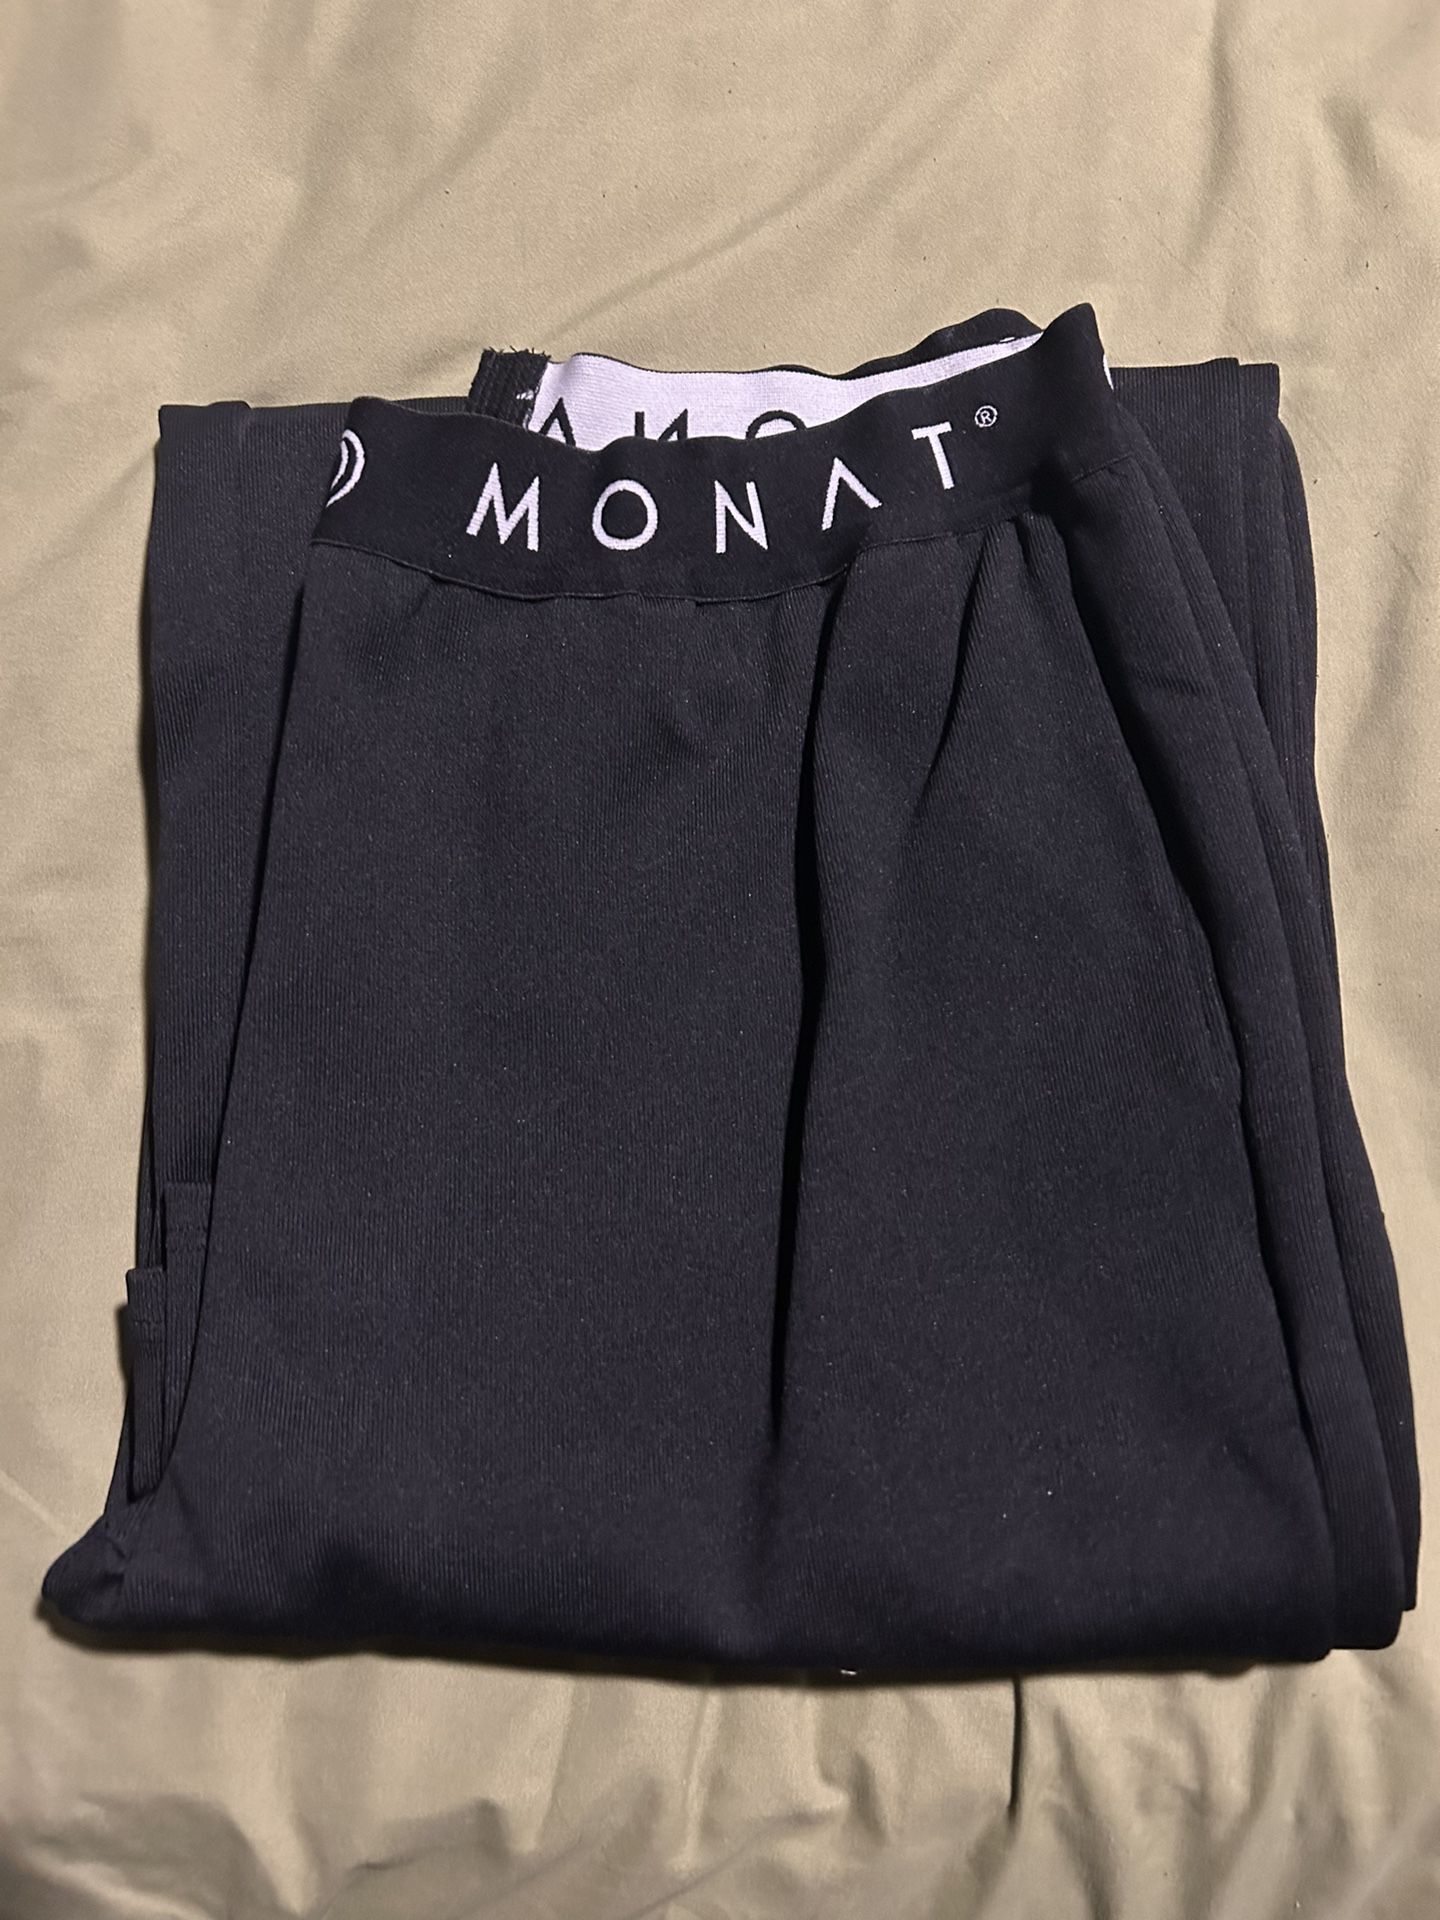 Monat Dress Pants Black 